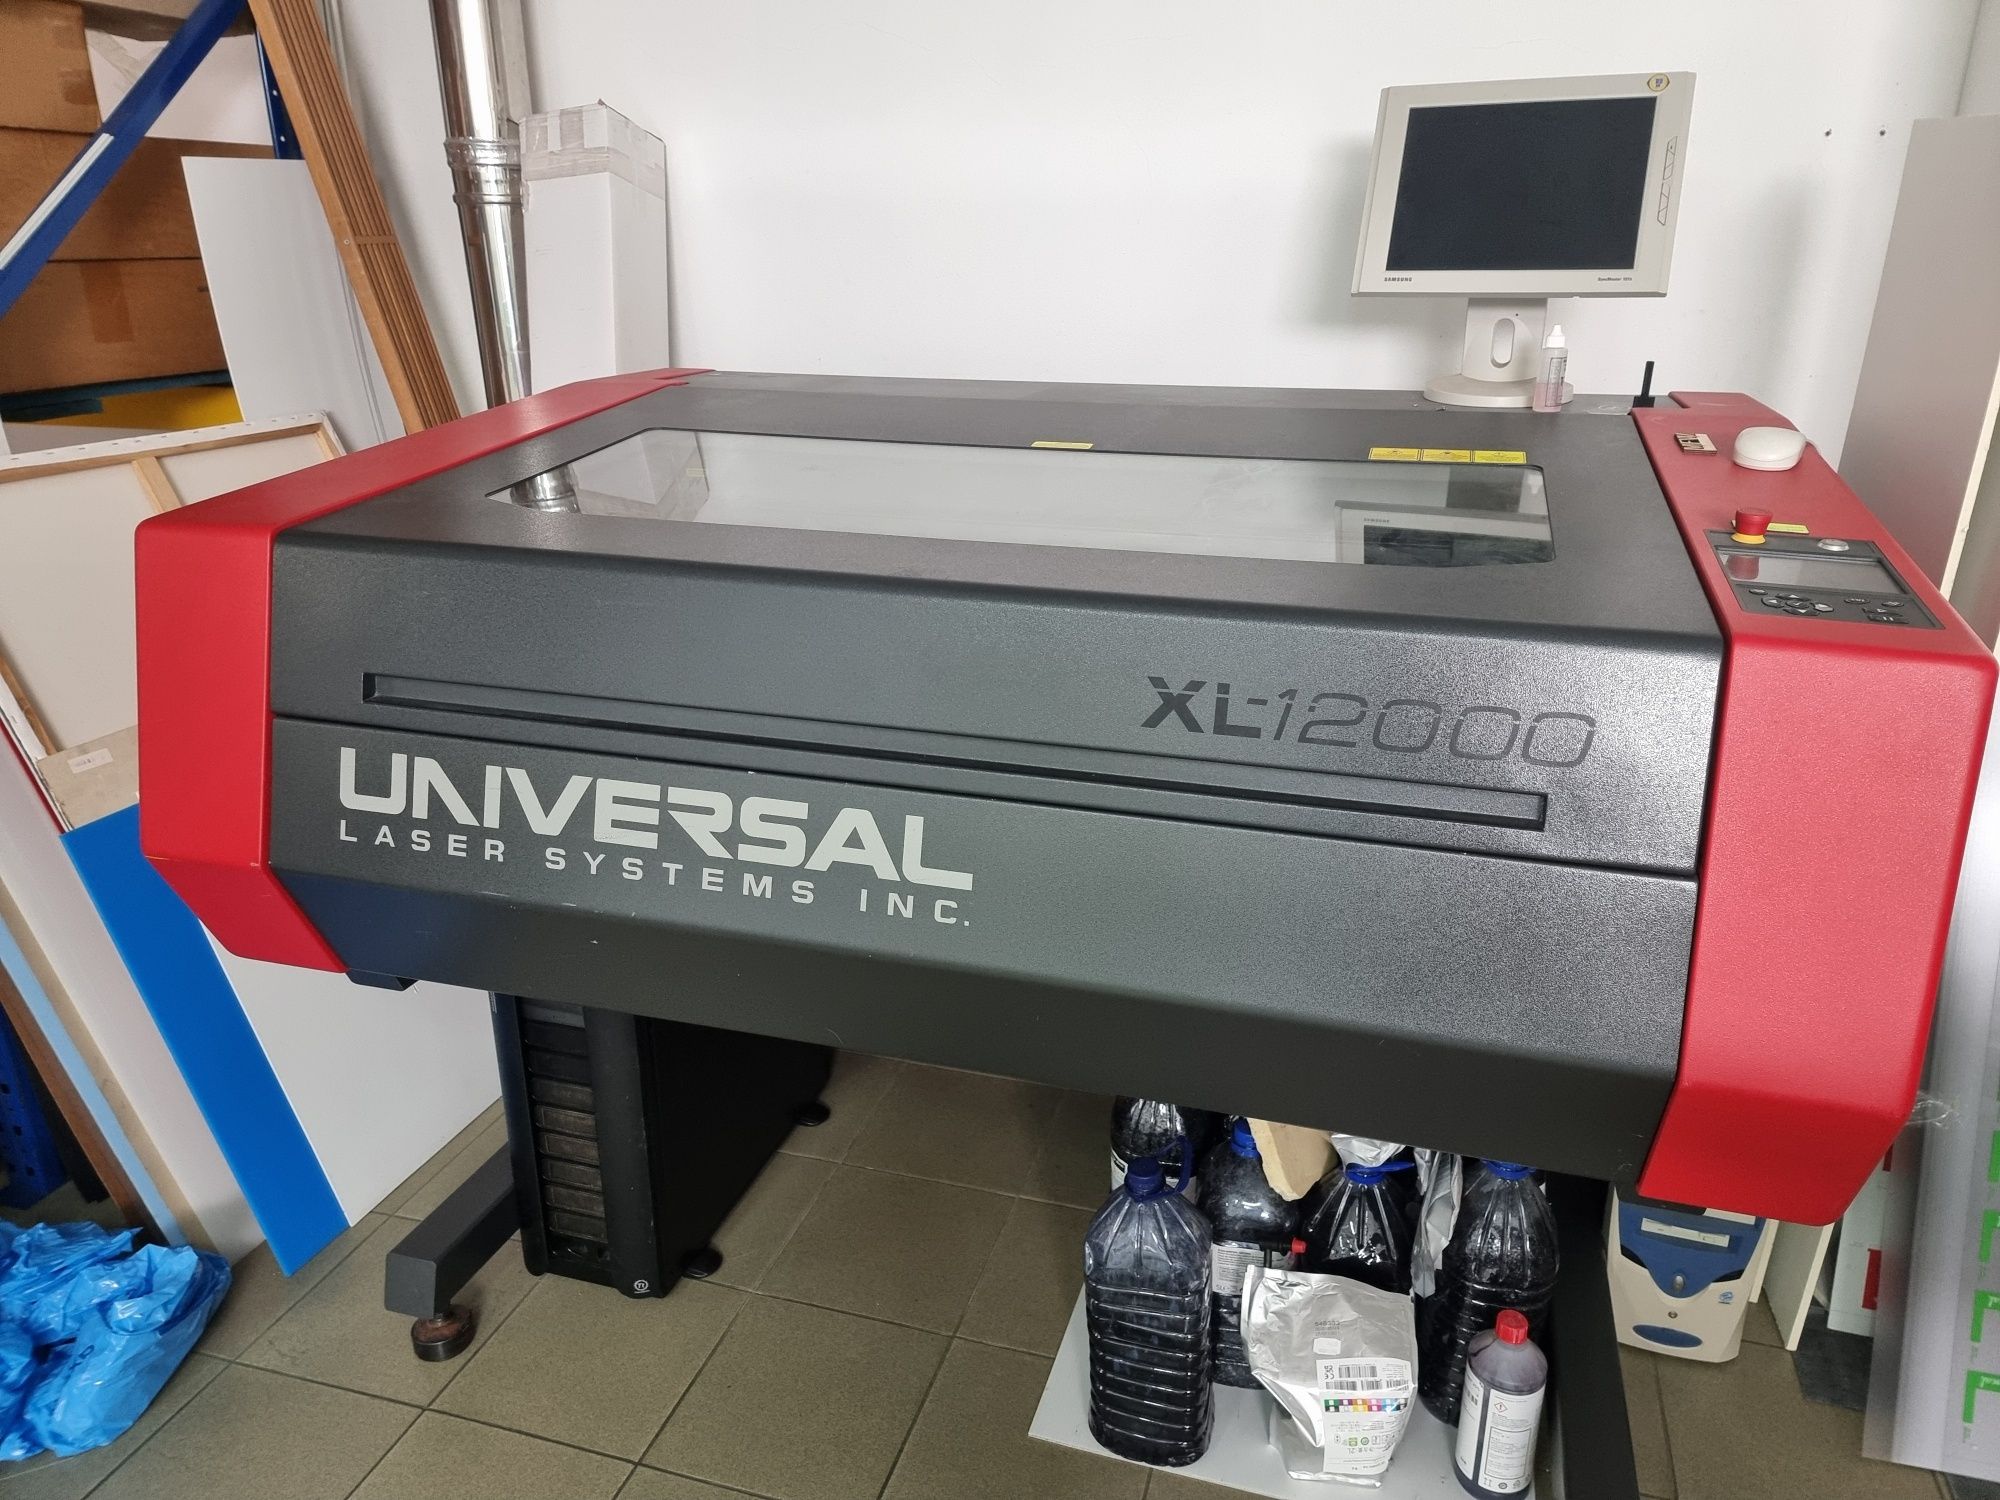 Laser universal laser systems XL-12000